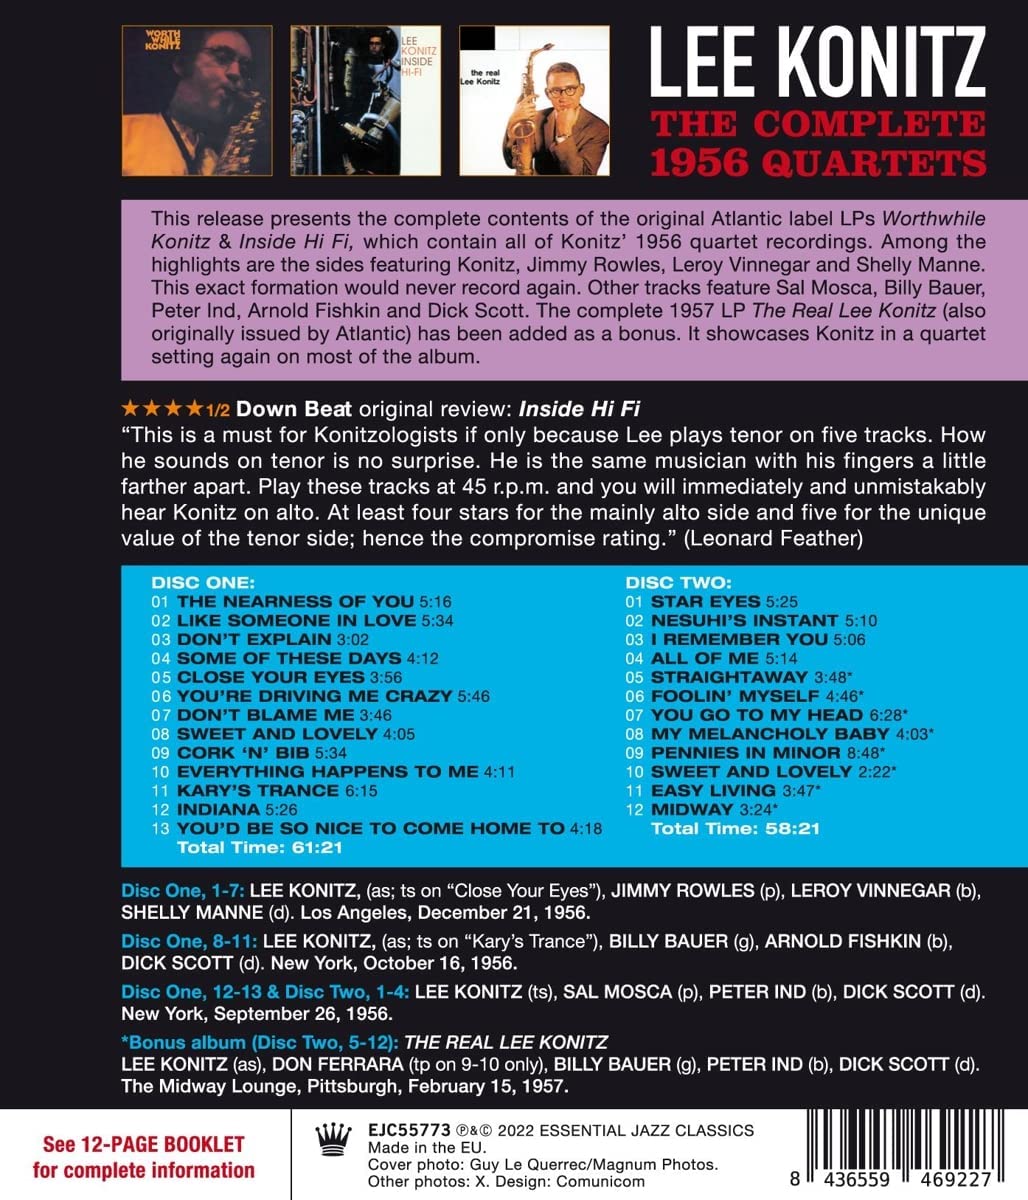 Lee Konitz - The Complete 1956 Quartets [Audio CD]